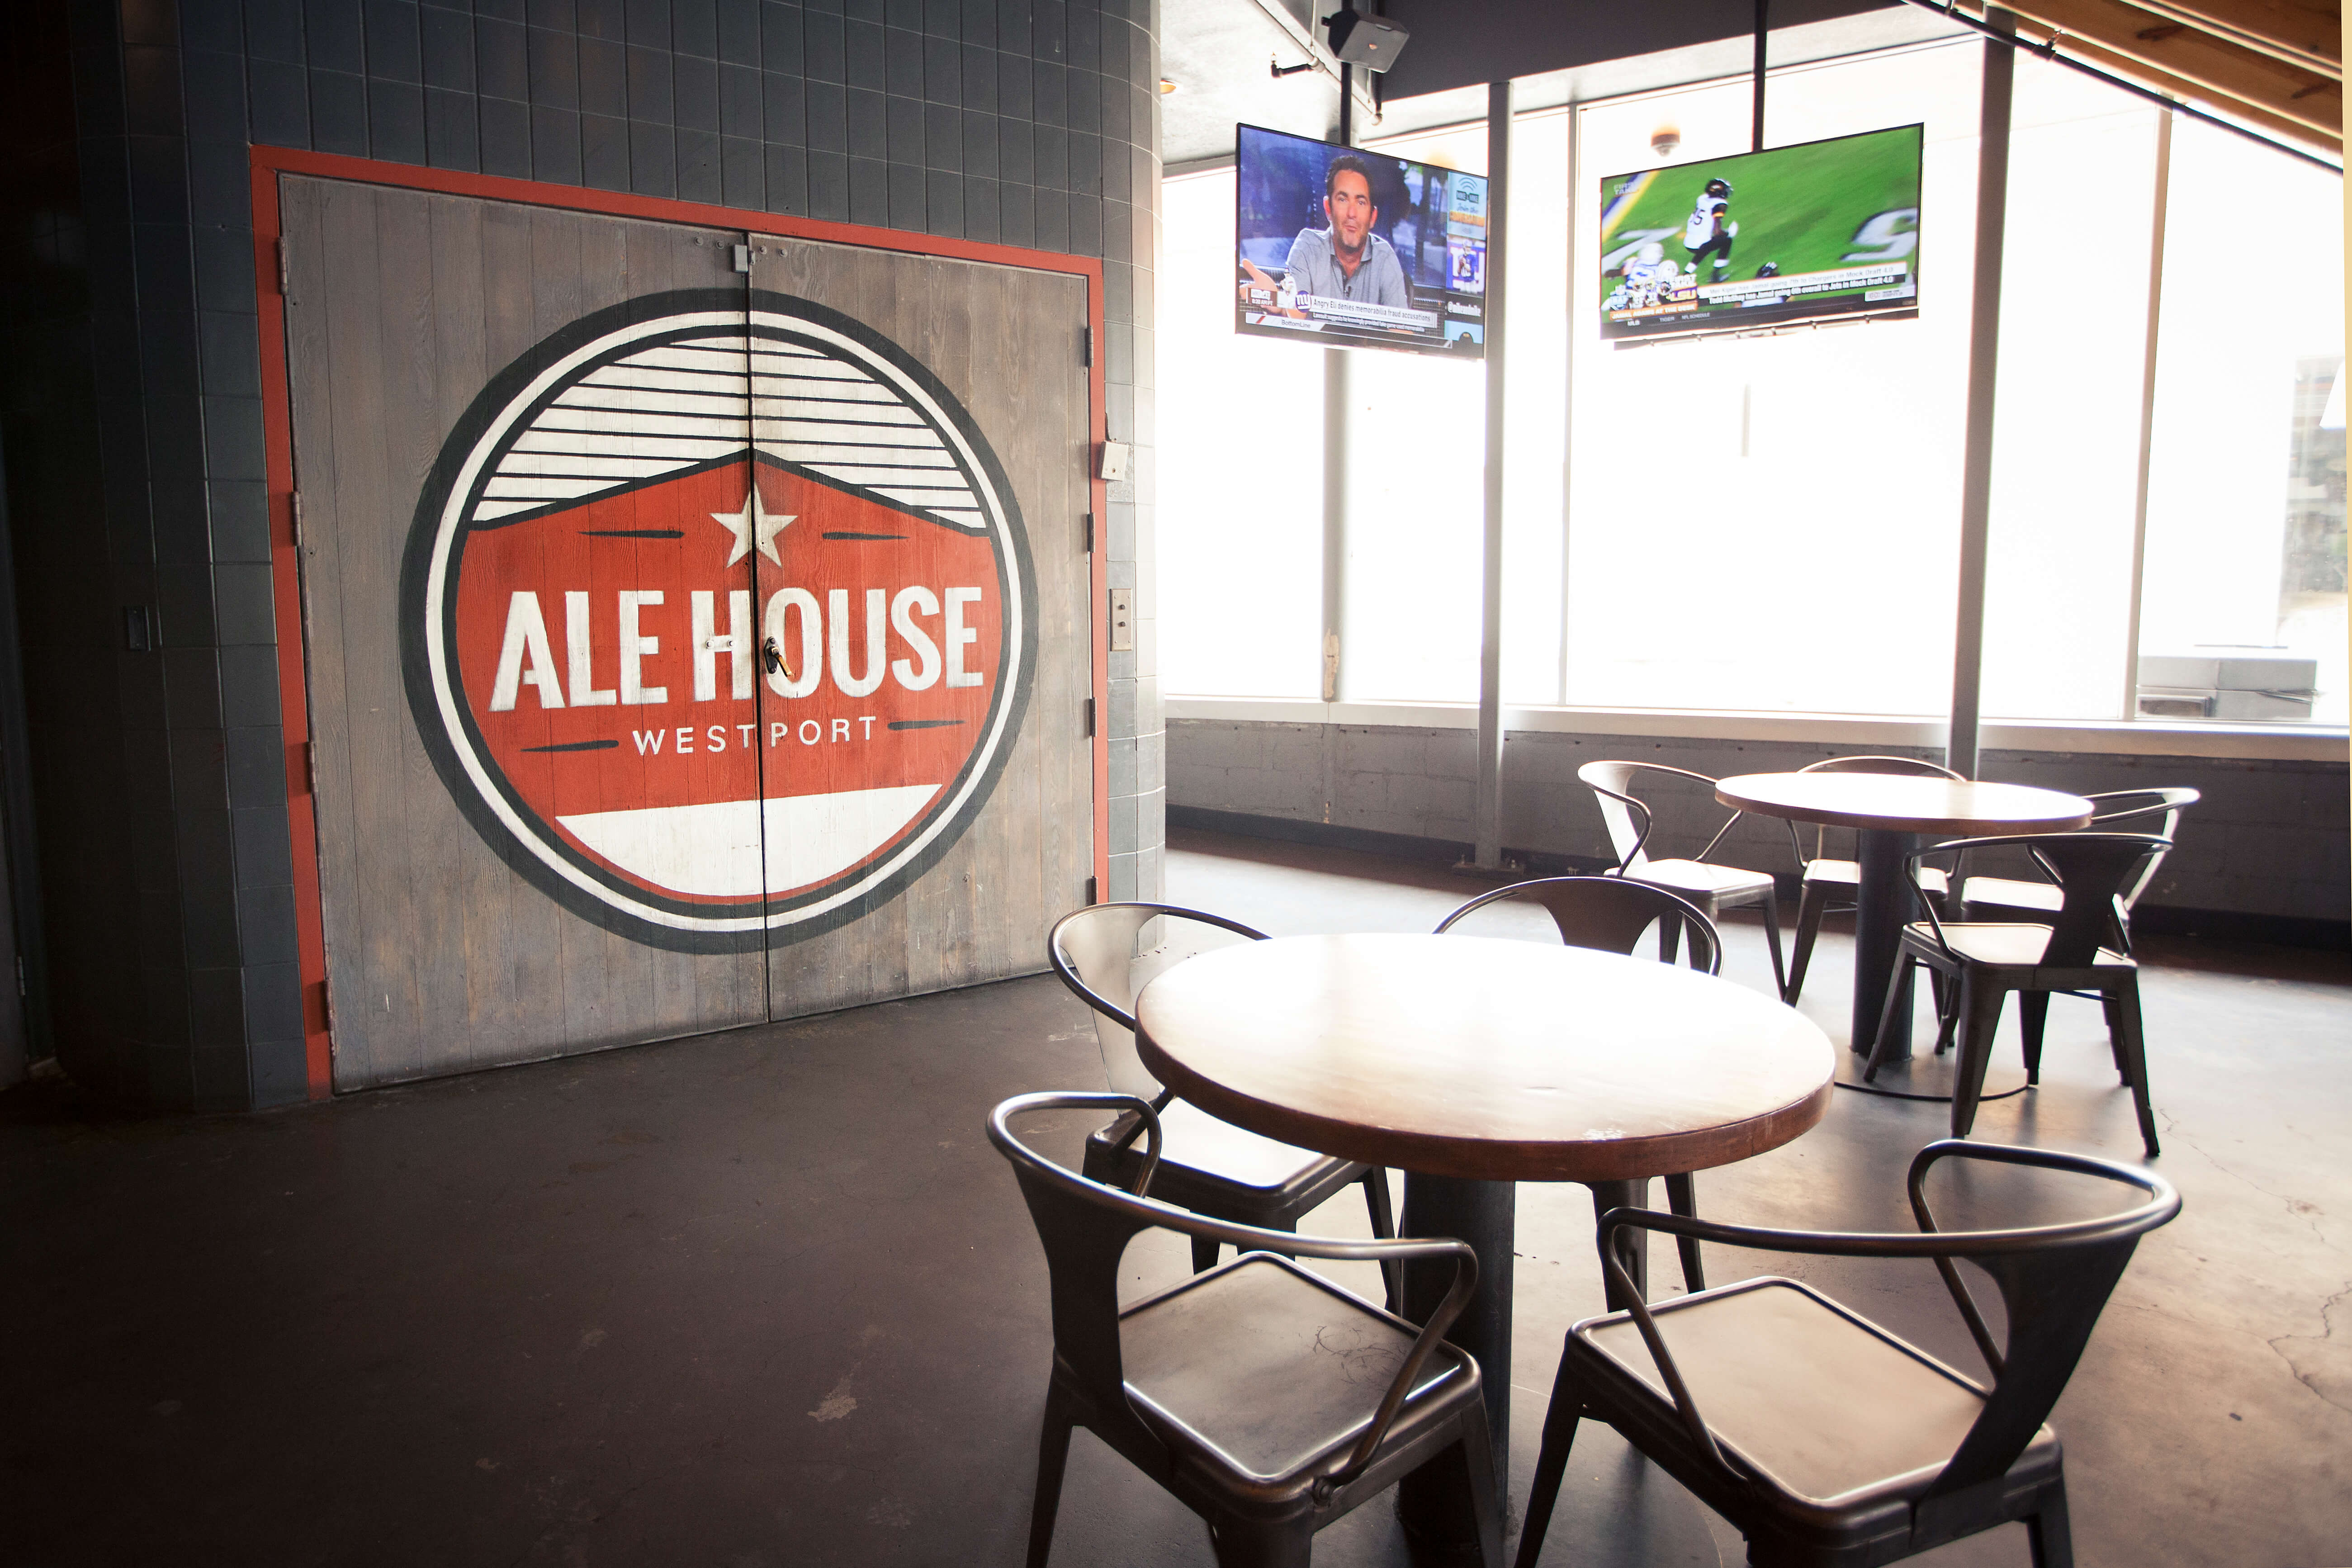 Ale House: One of the Best Restaurants Near Lee Summit - Westport Ale House